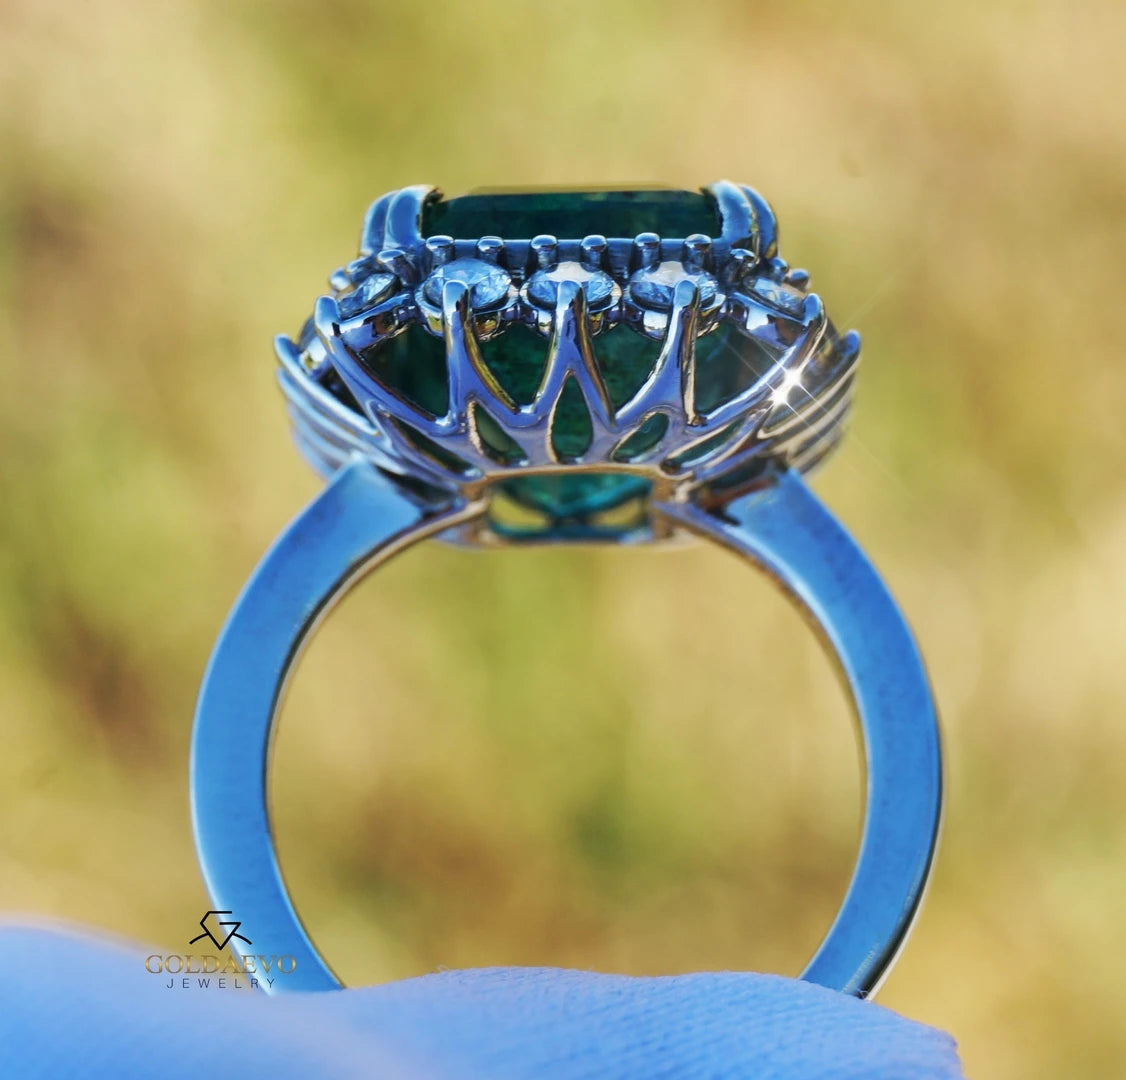 Emerald & diamond ring 14k white gold 12.16 ctw gia certified